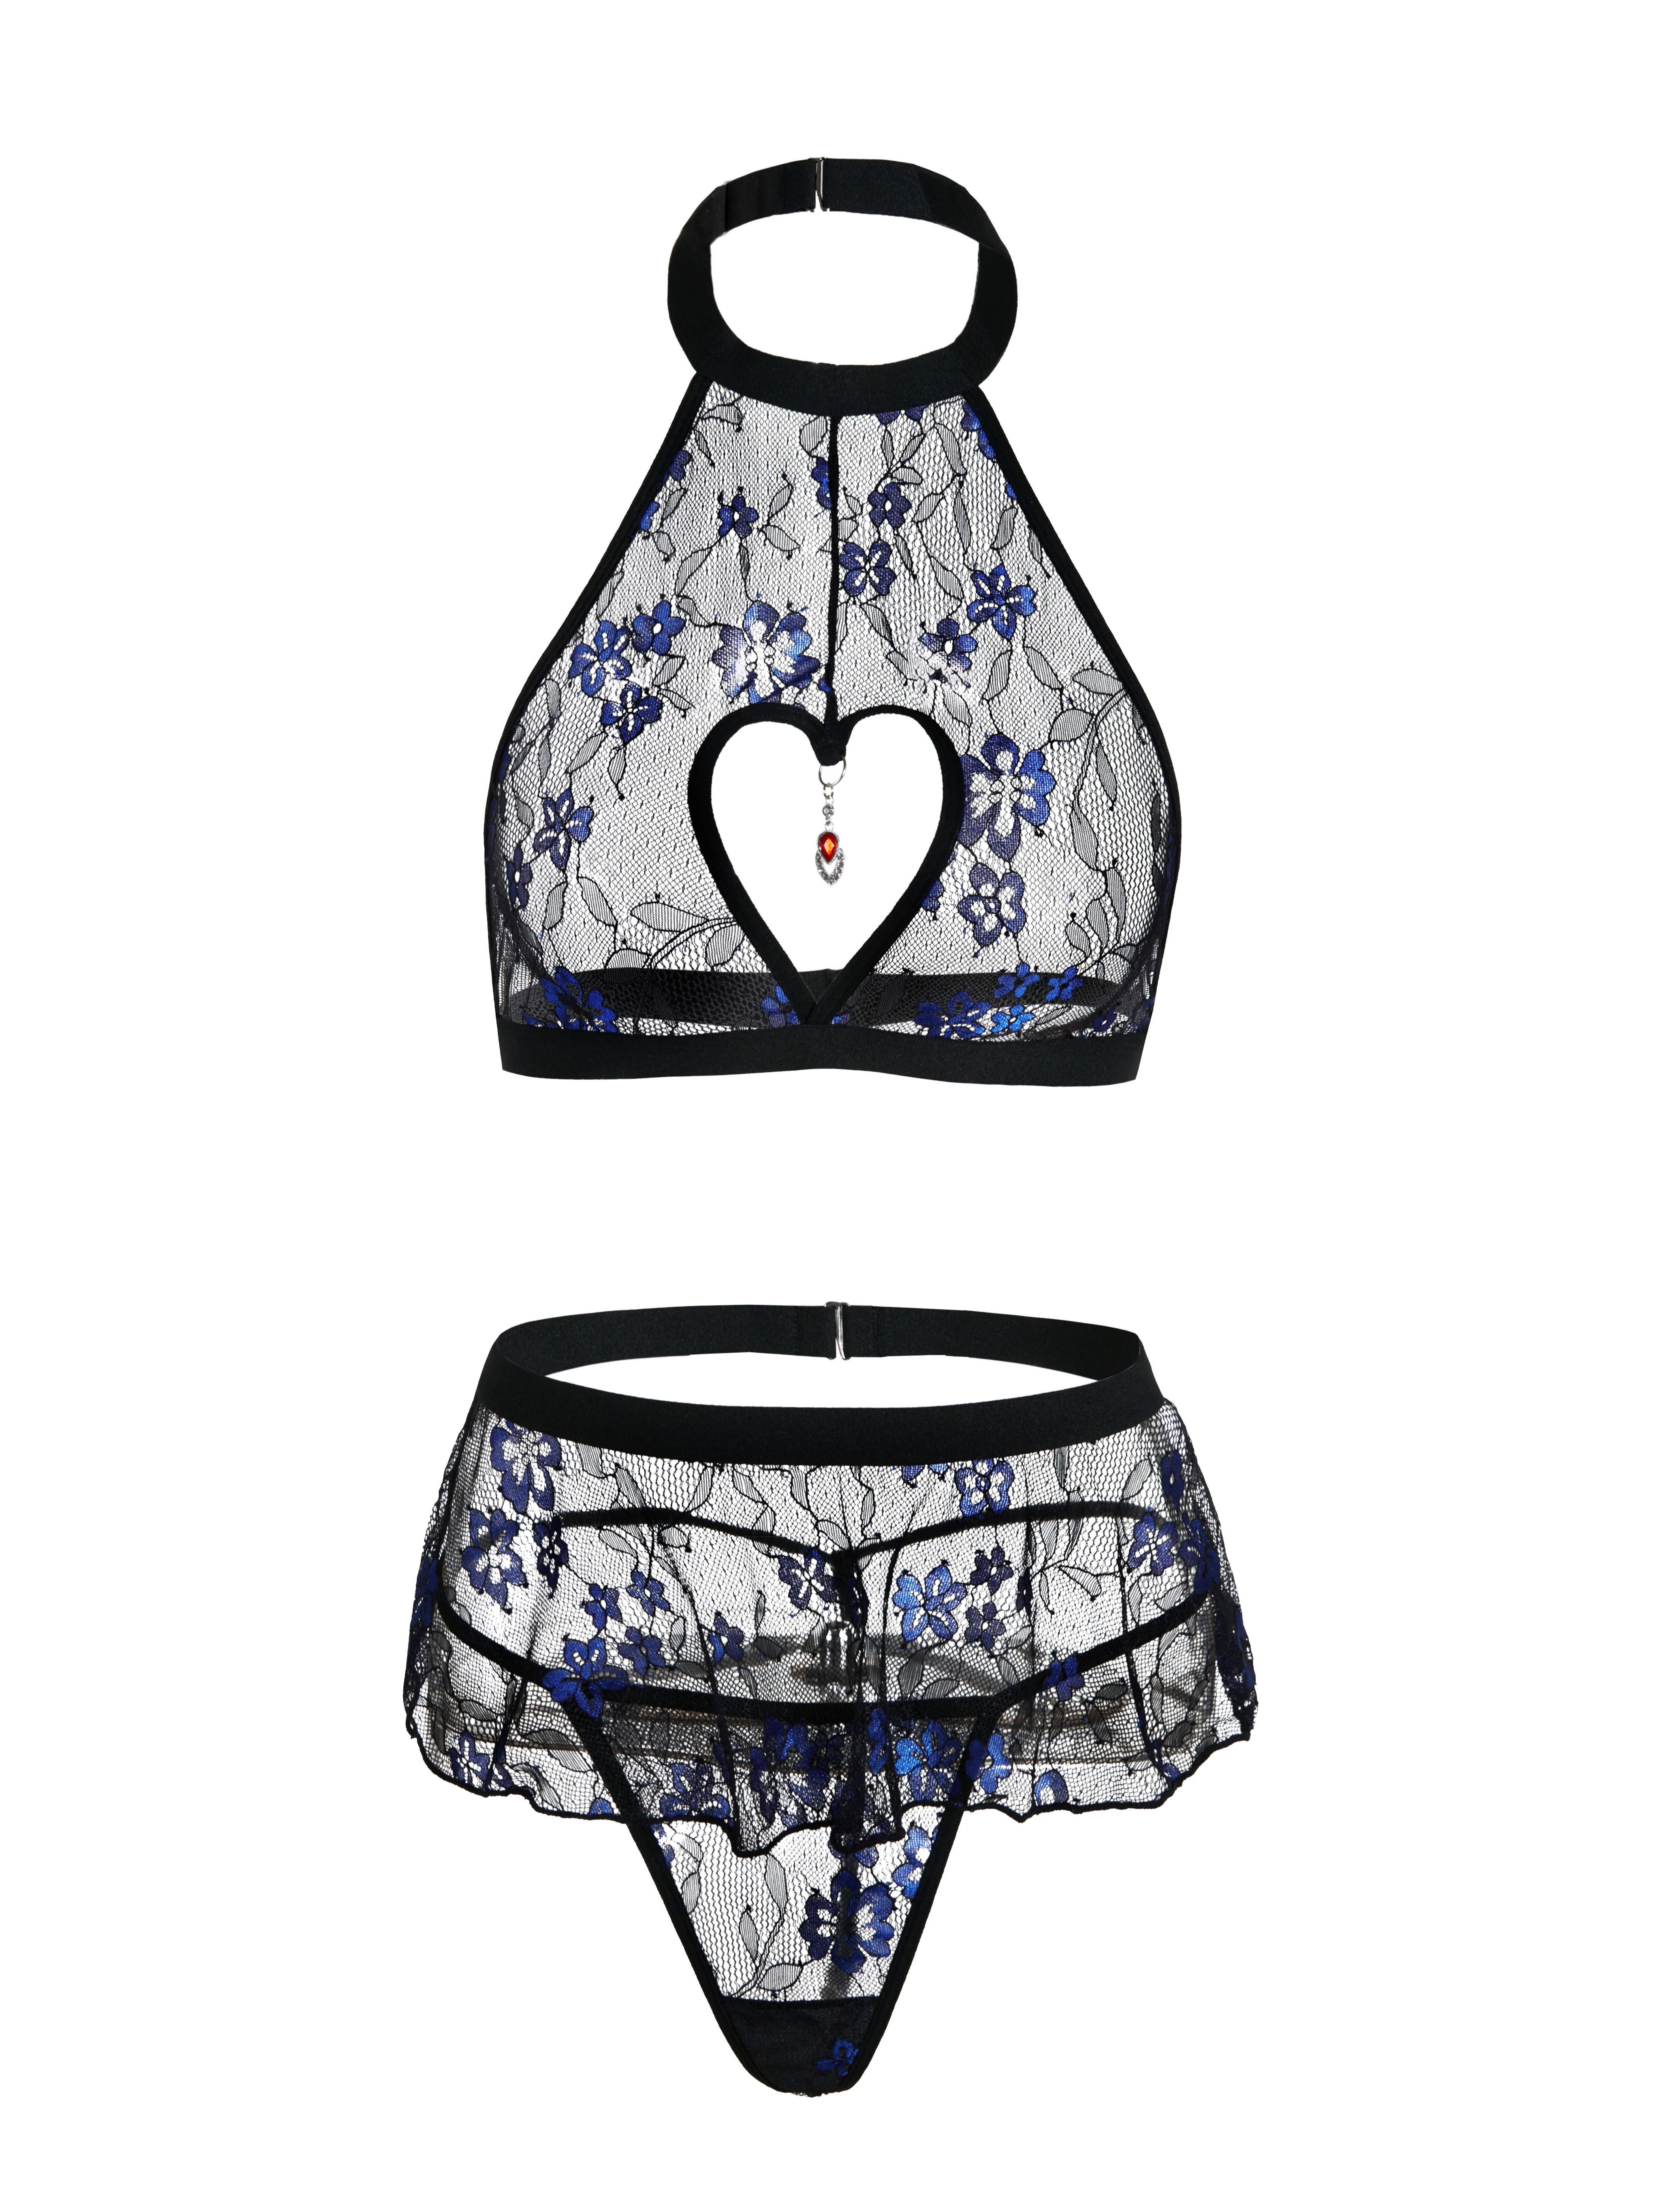 Camouflage Print Mesh Lingerie Set, Push Up Bra & Garter Belt Thong,  Women's Sexy Lingerie & Underwear